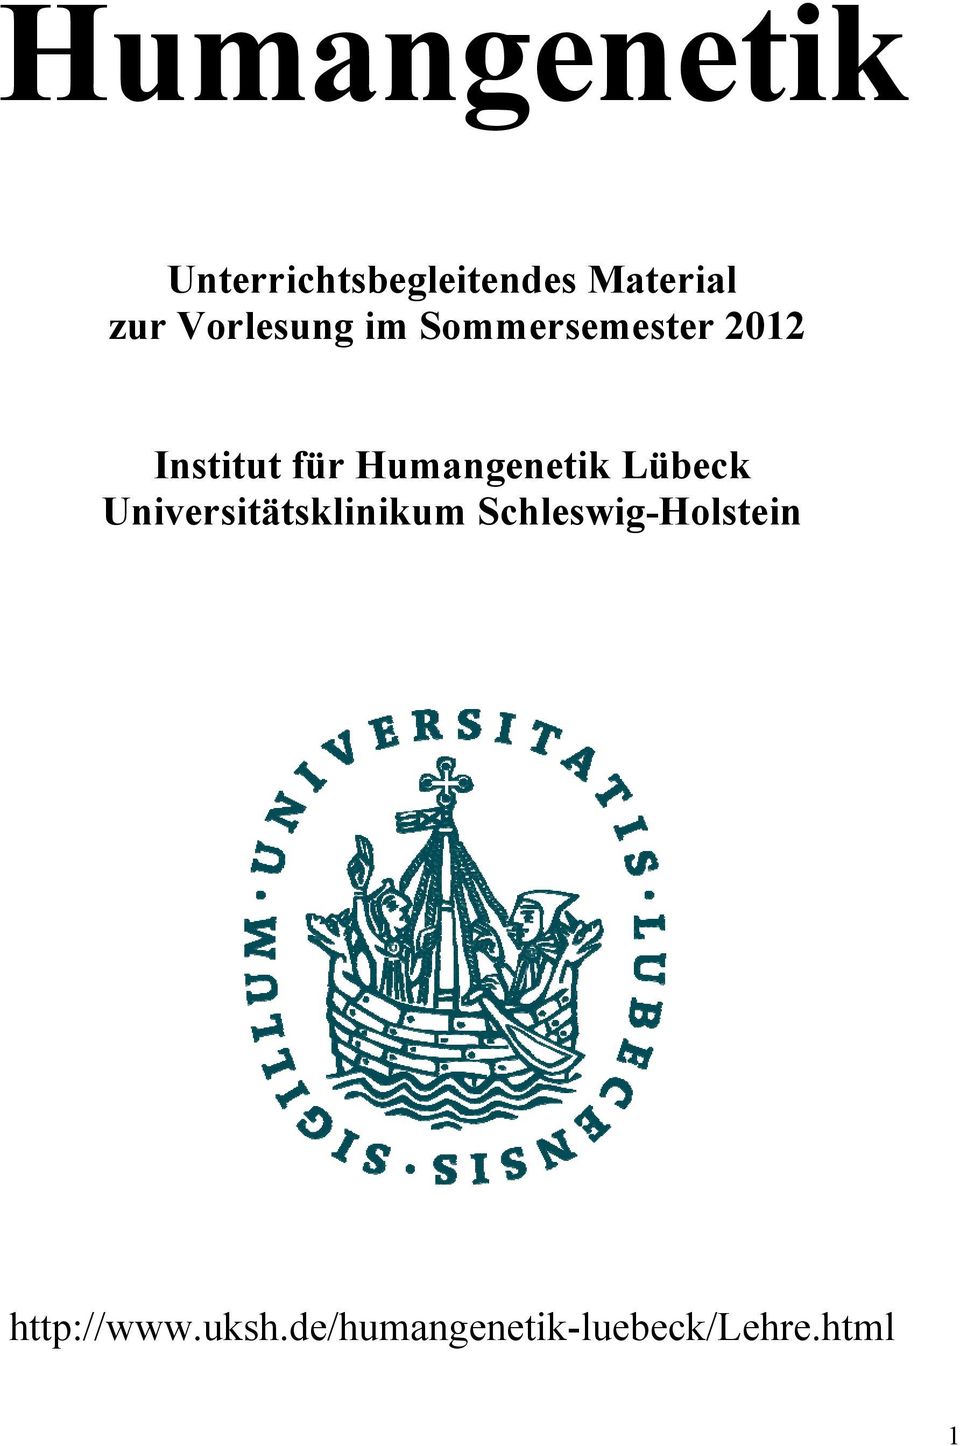 Humangenetik Lübeck Universitätsklinikum